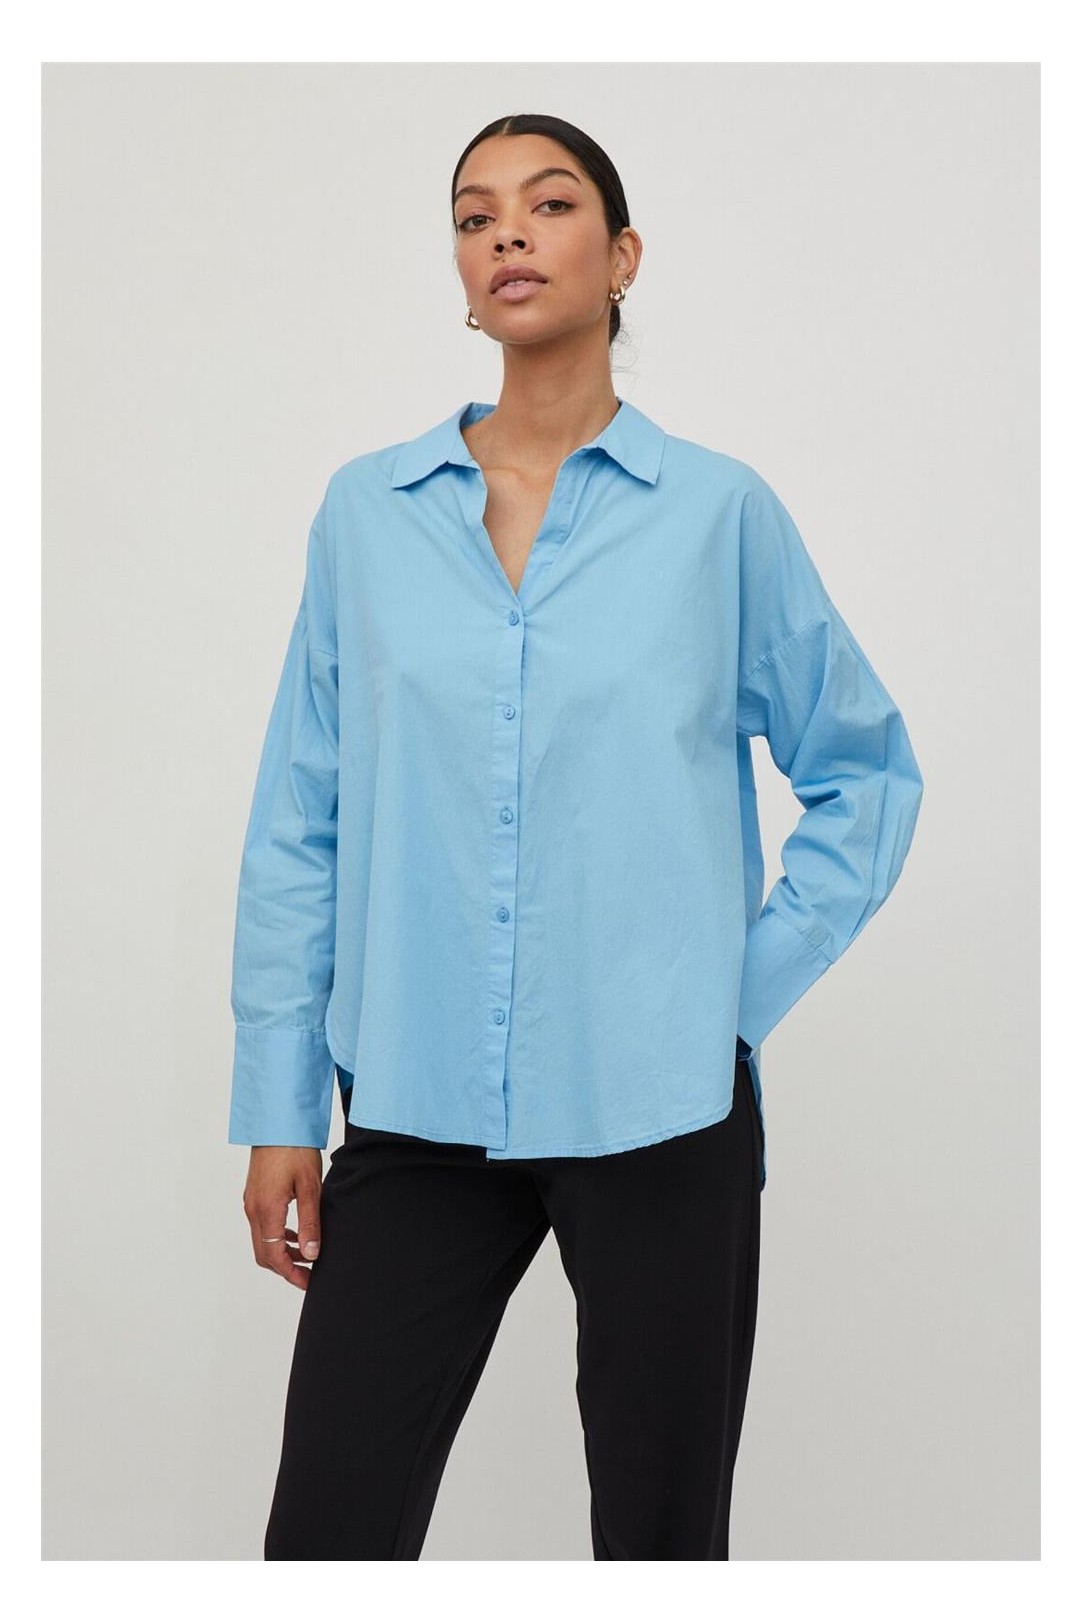 solitario Ventana mundial Cambiable Camisa manga larga Vigamis azul Talla 40 Color AZUL